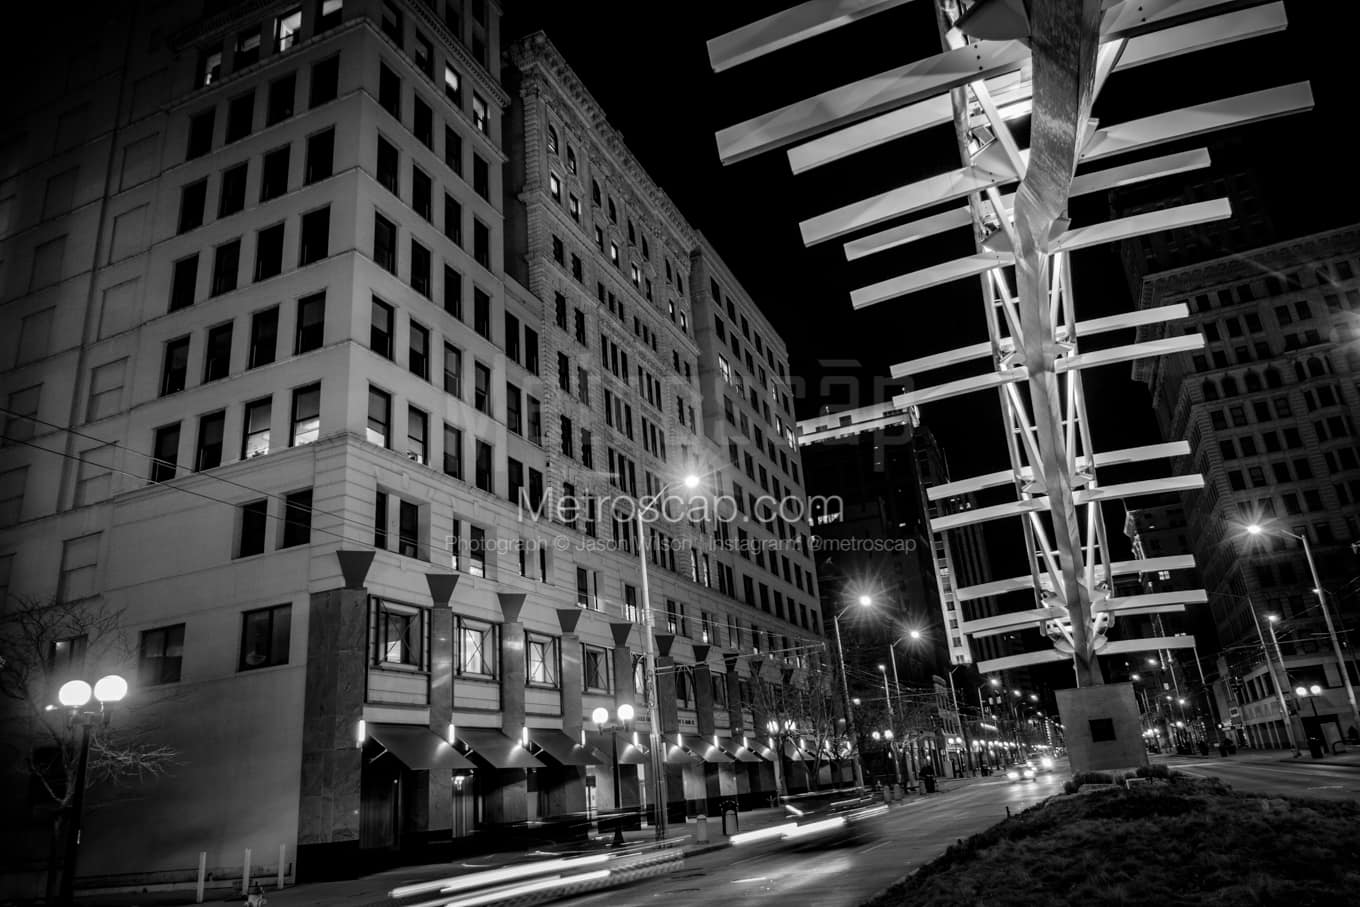 Black & White Dayton Architecture Pictures